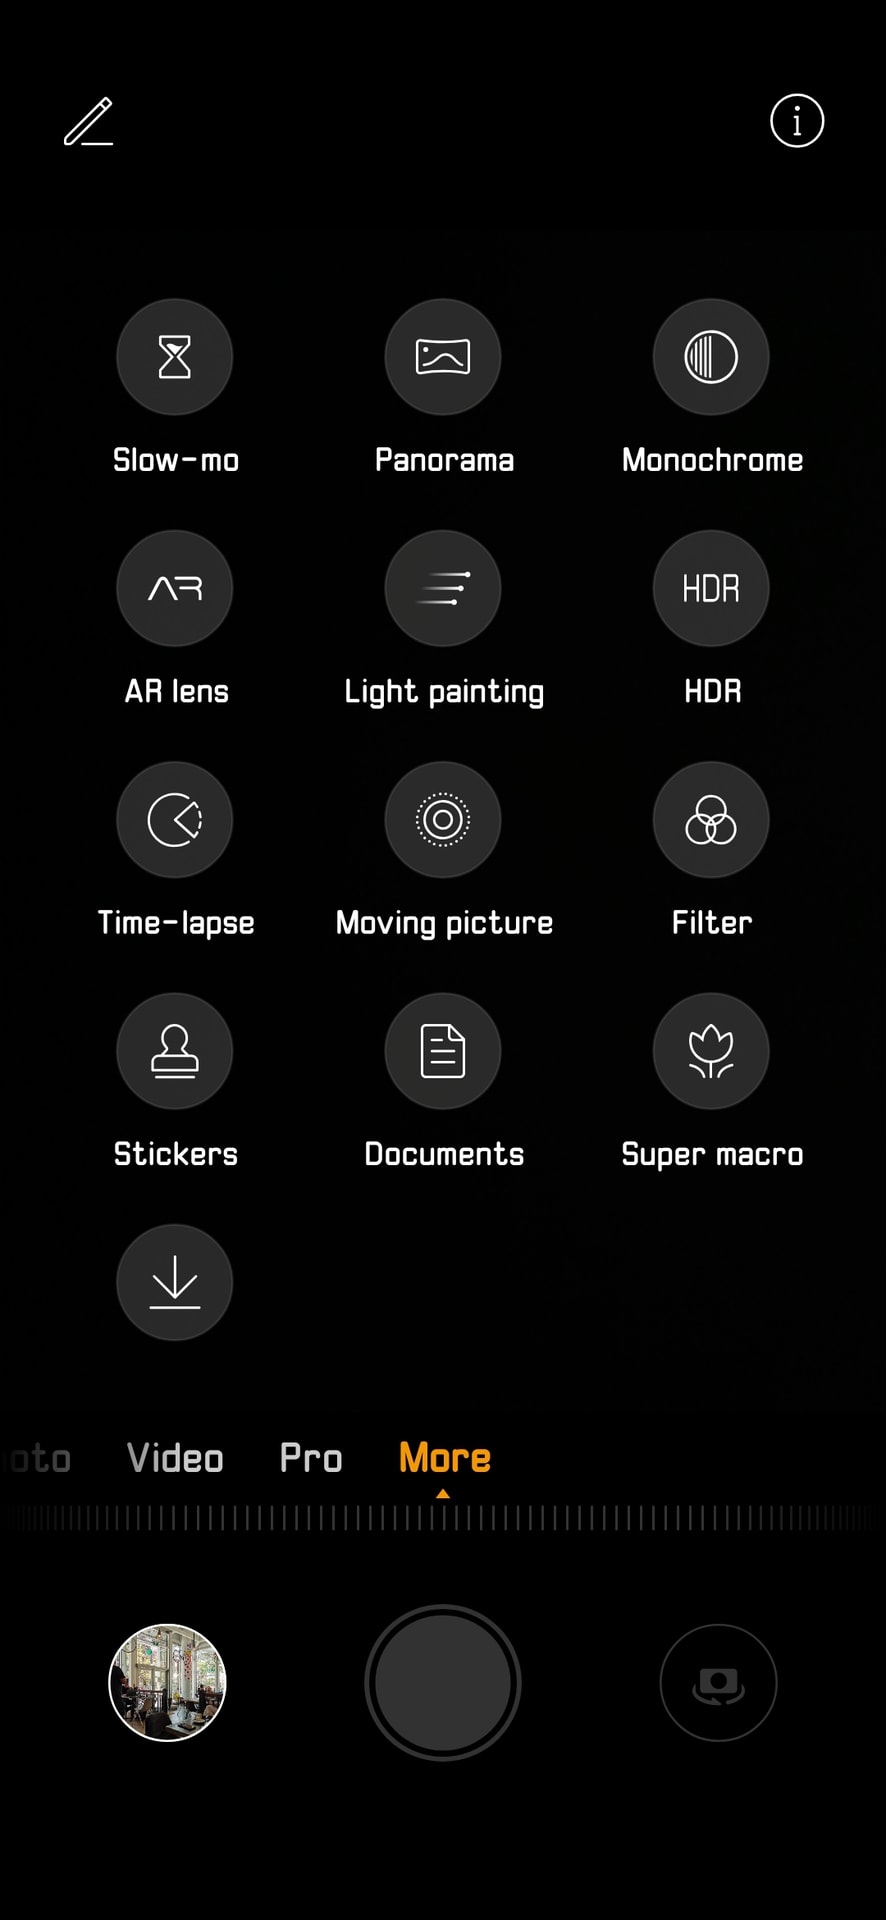 HUAWEI P30 camera app more mode